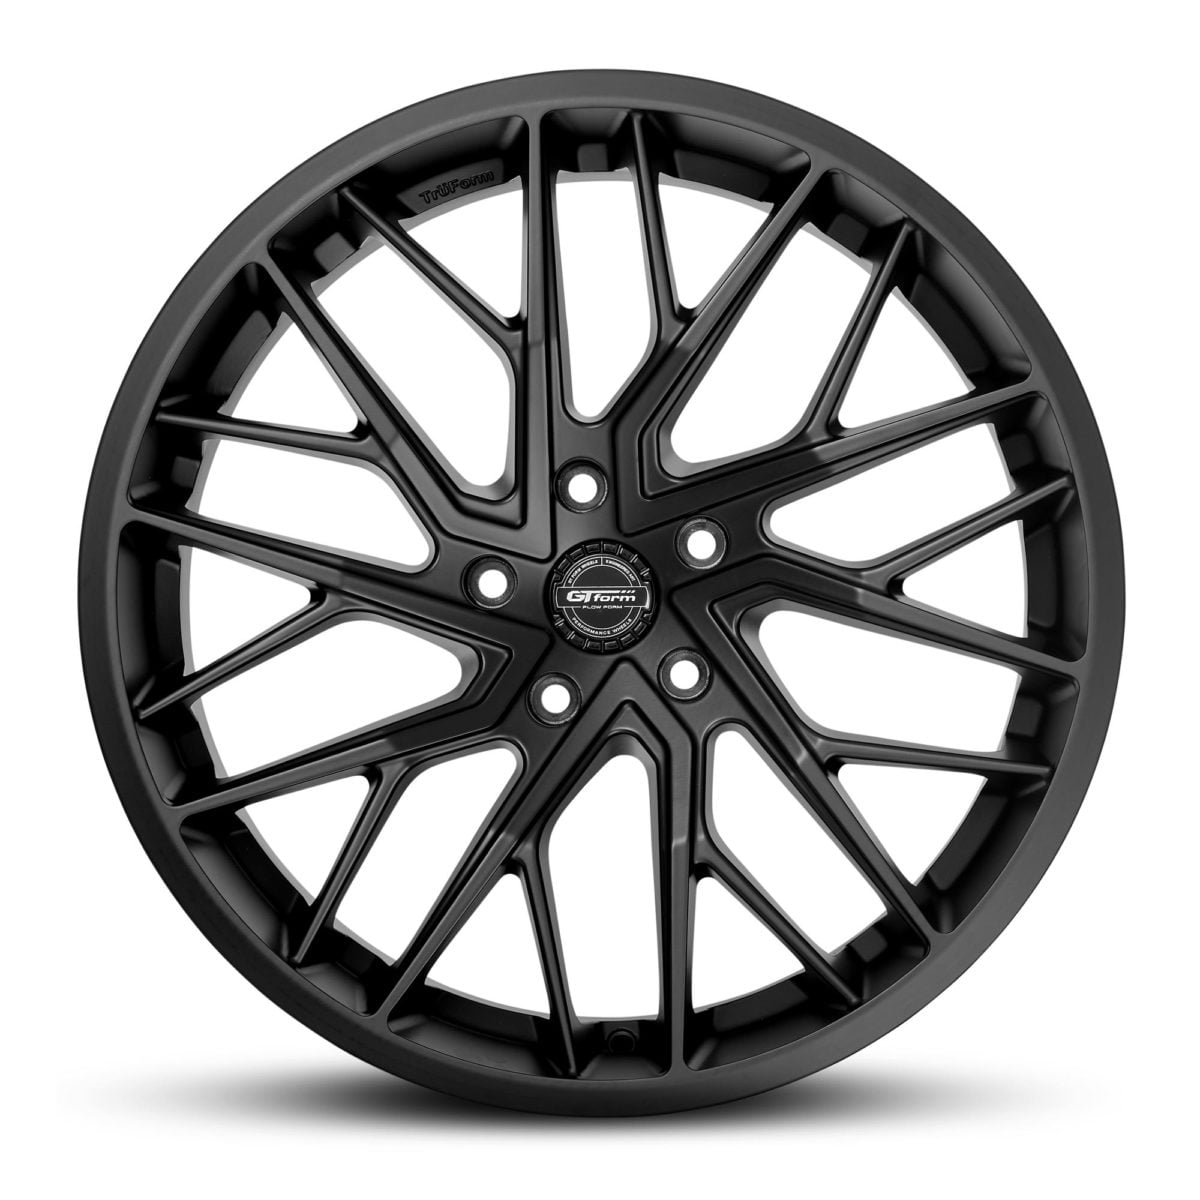 GT form Vertex Satin Black 20 inch Wheels Performance Rims